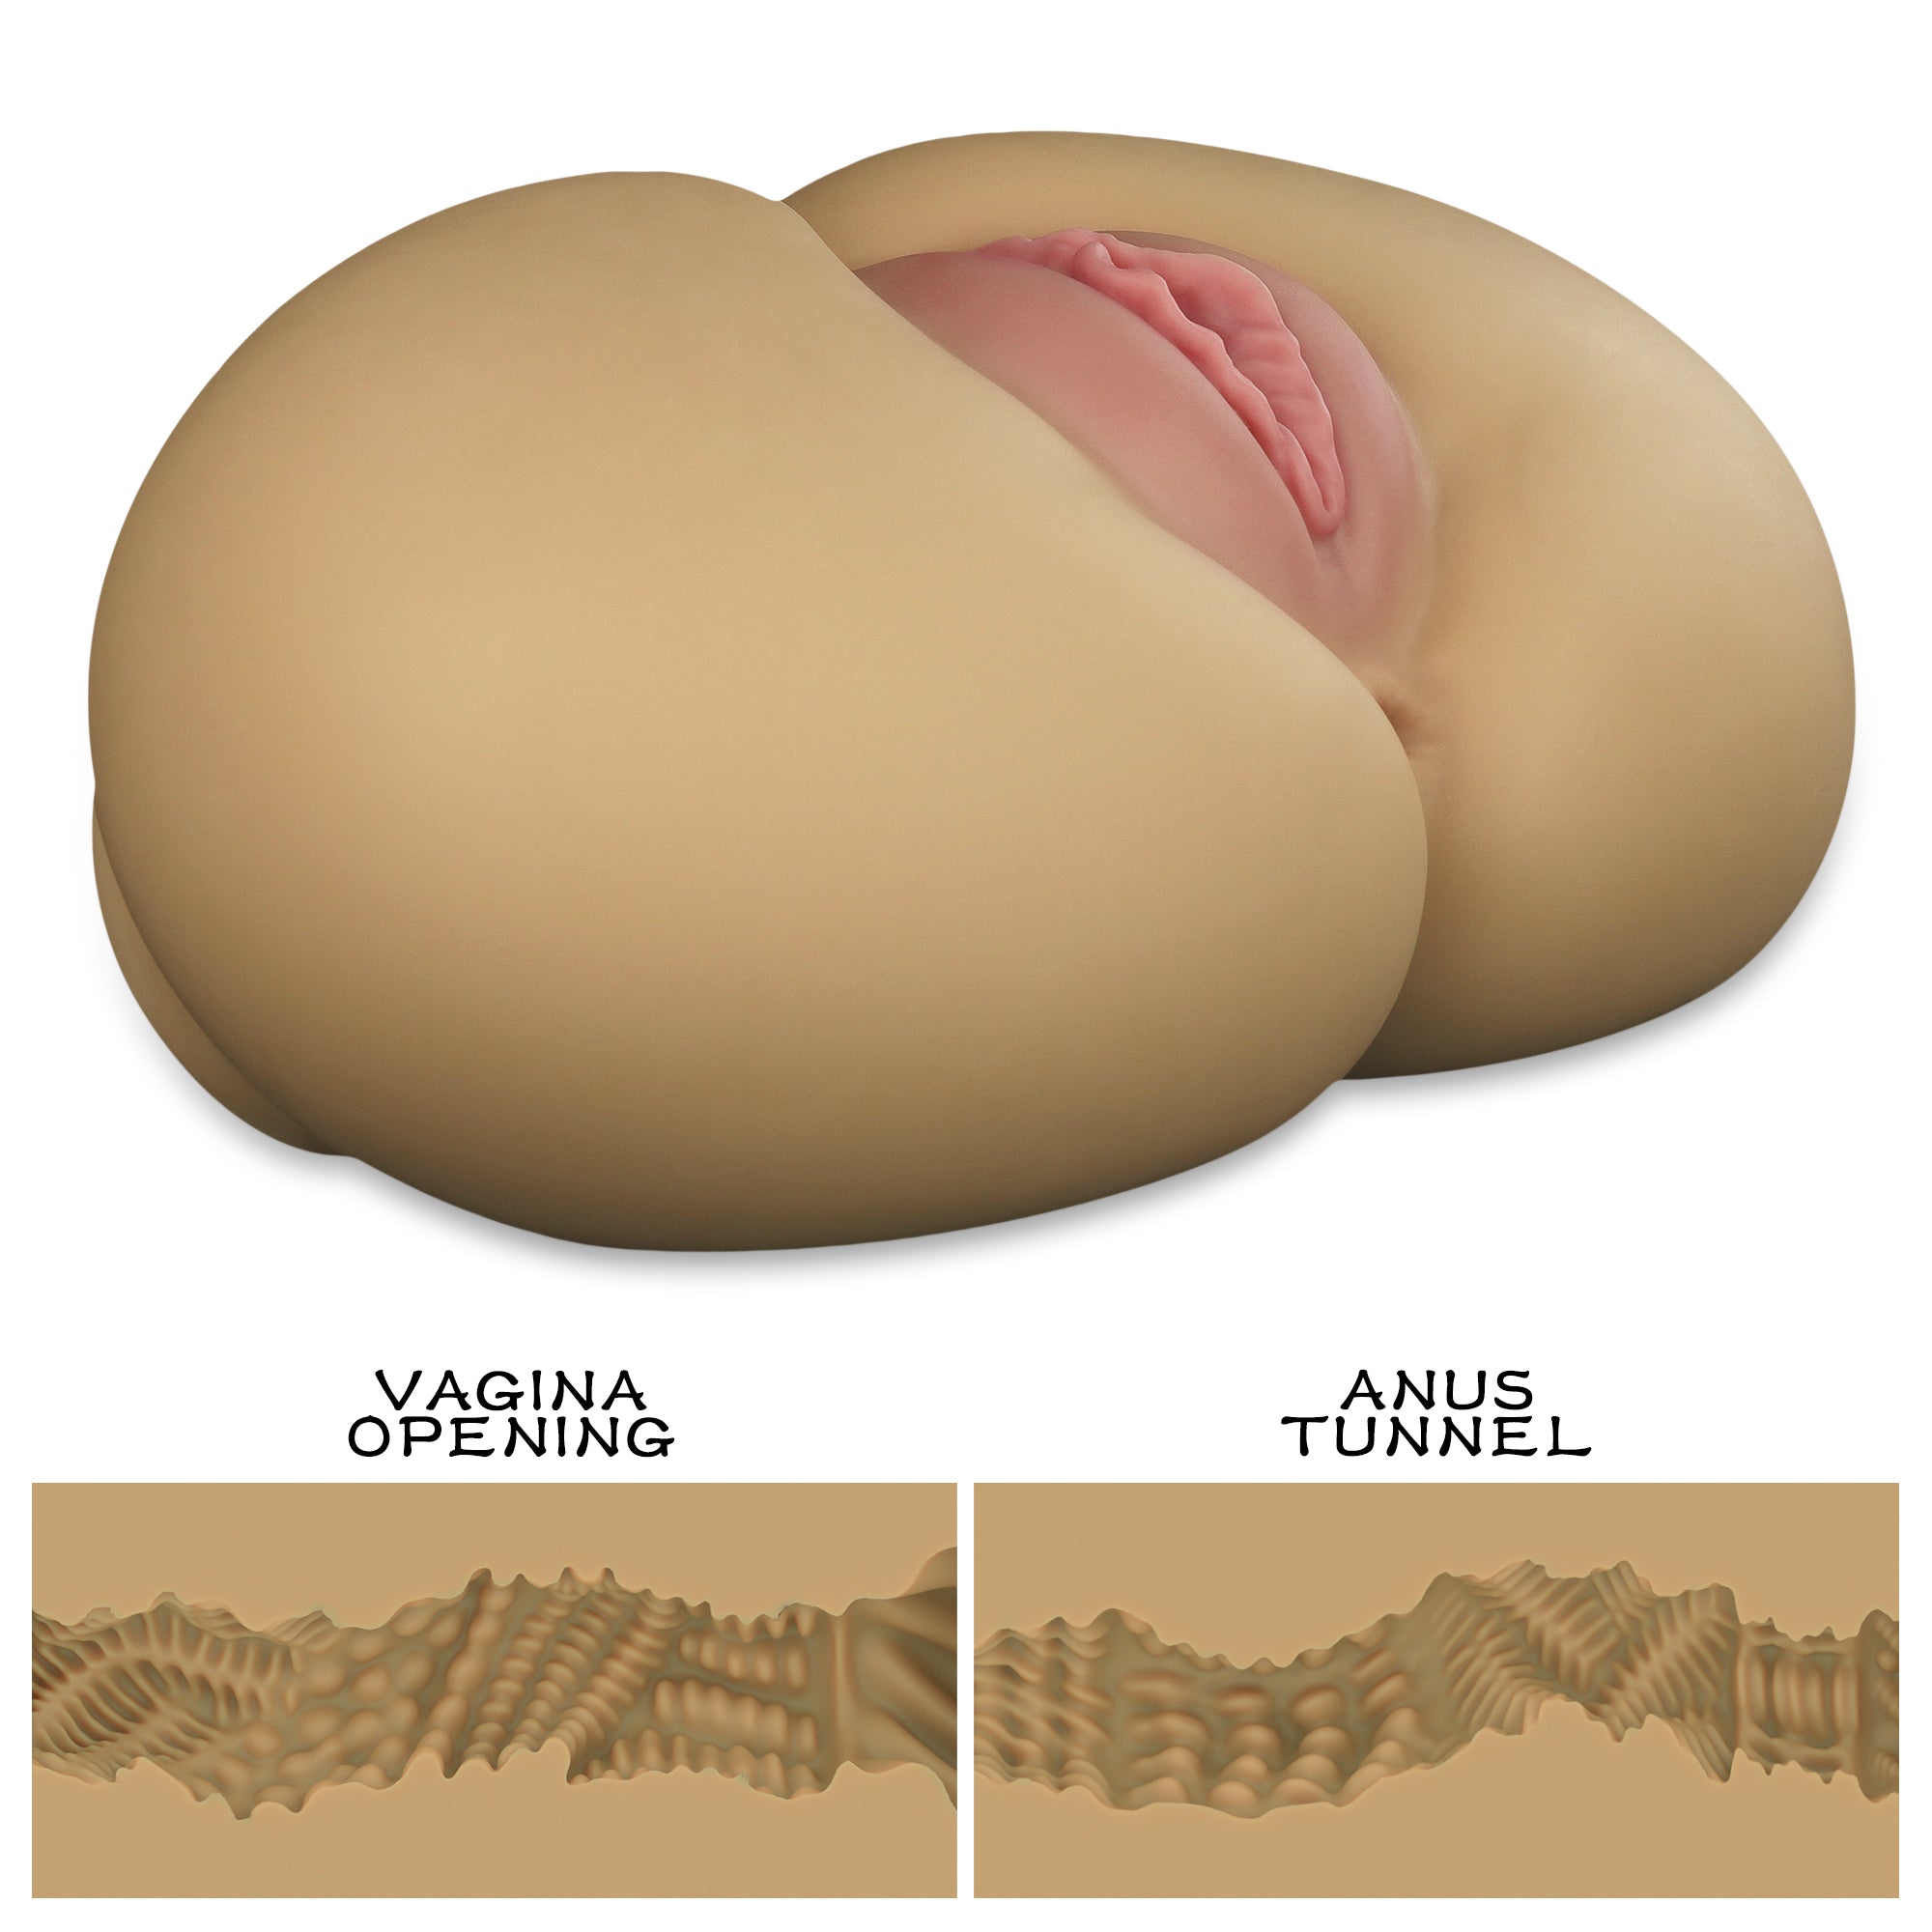 The vagina and anus tunnels of the flesh vagina ass male masturbator